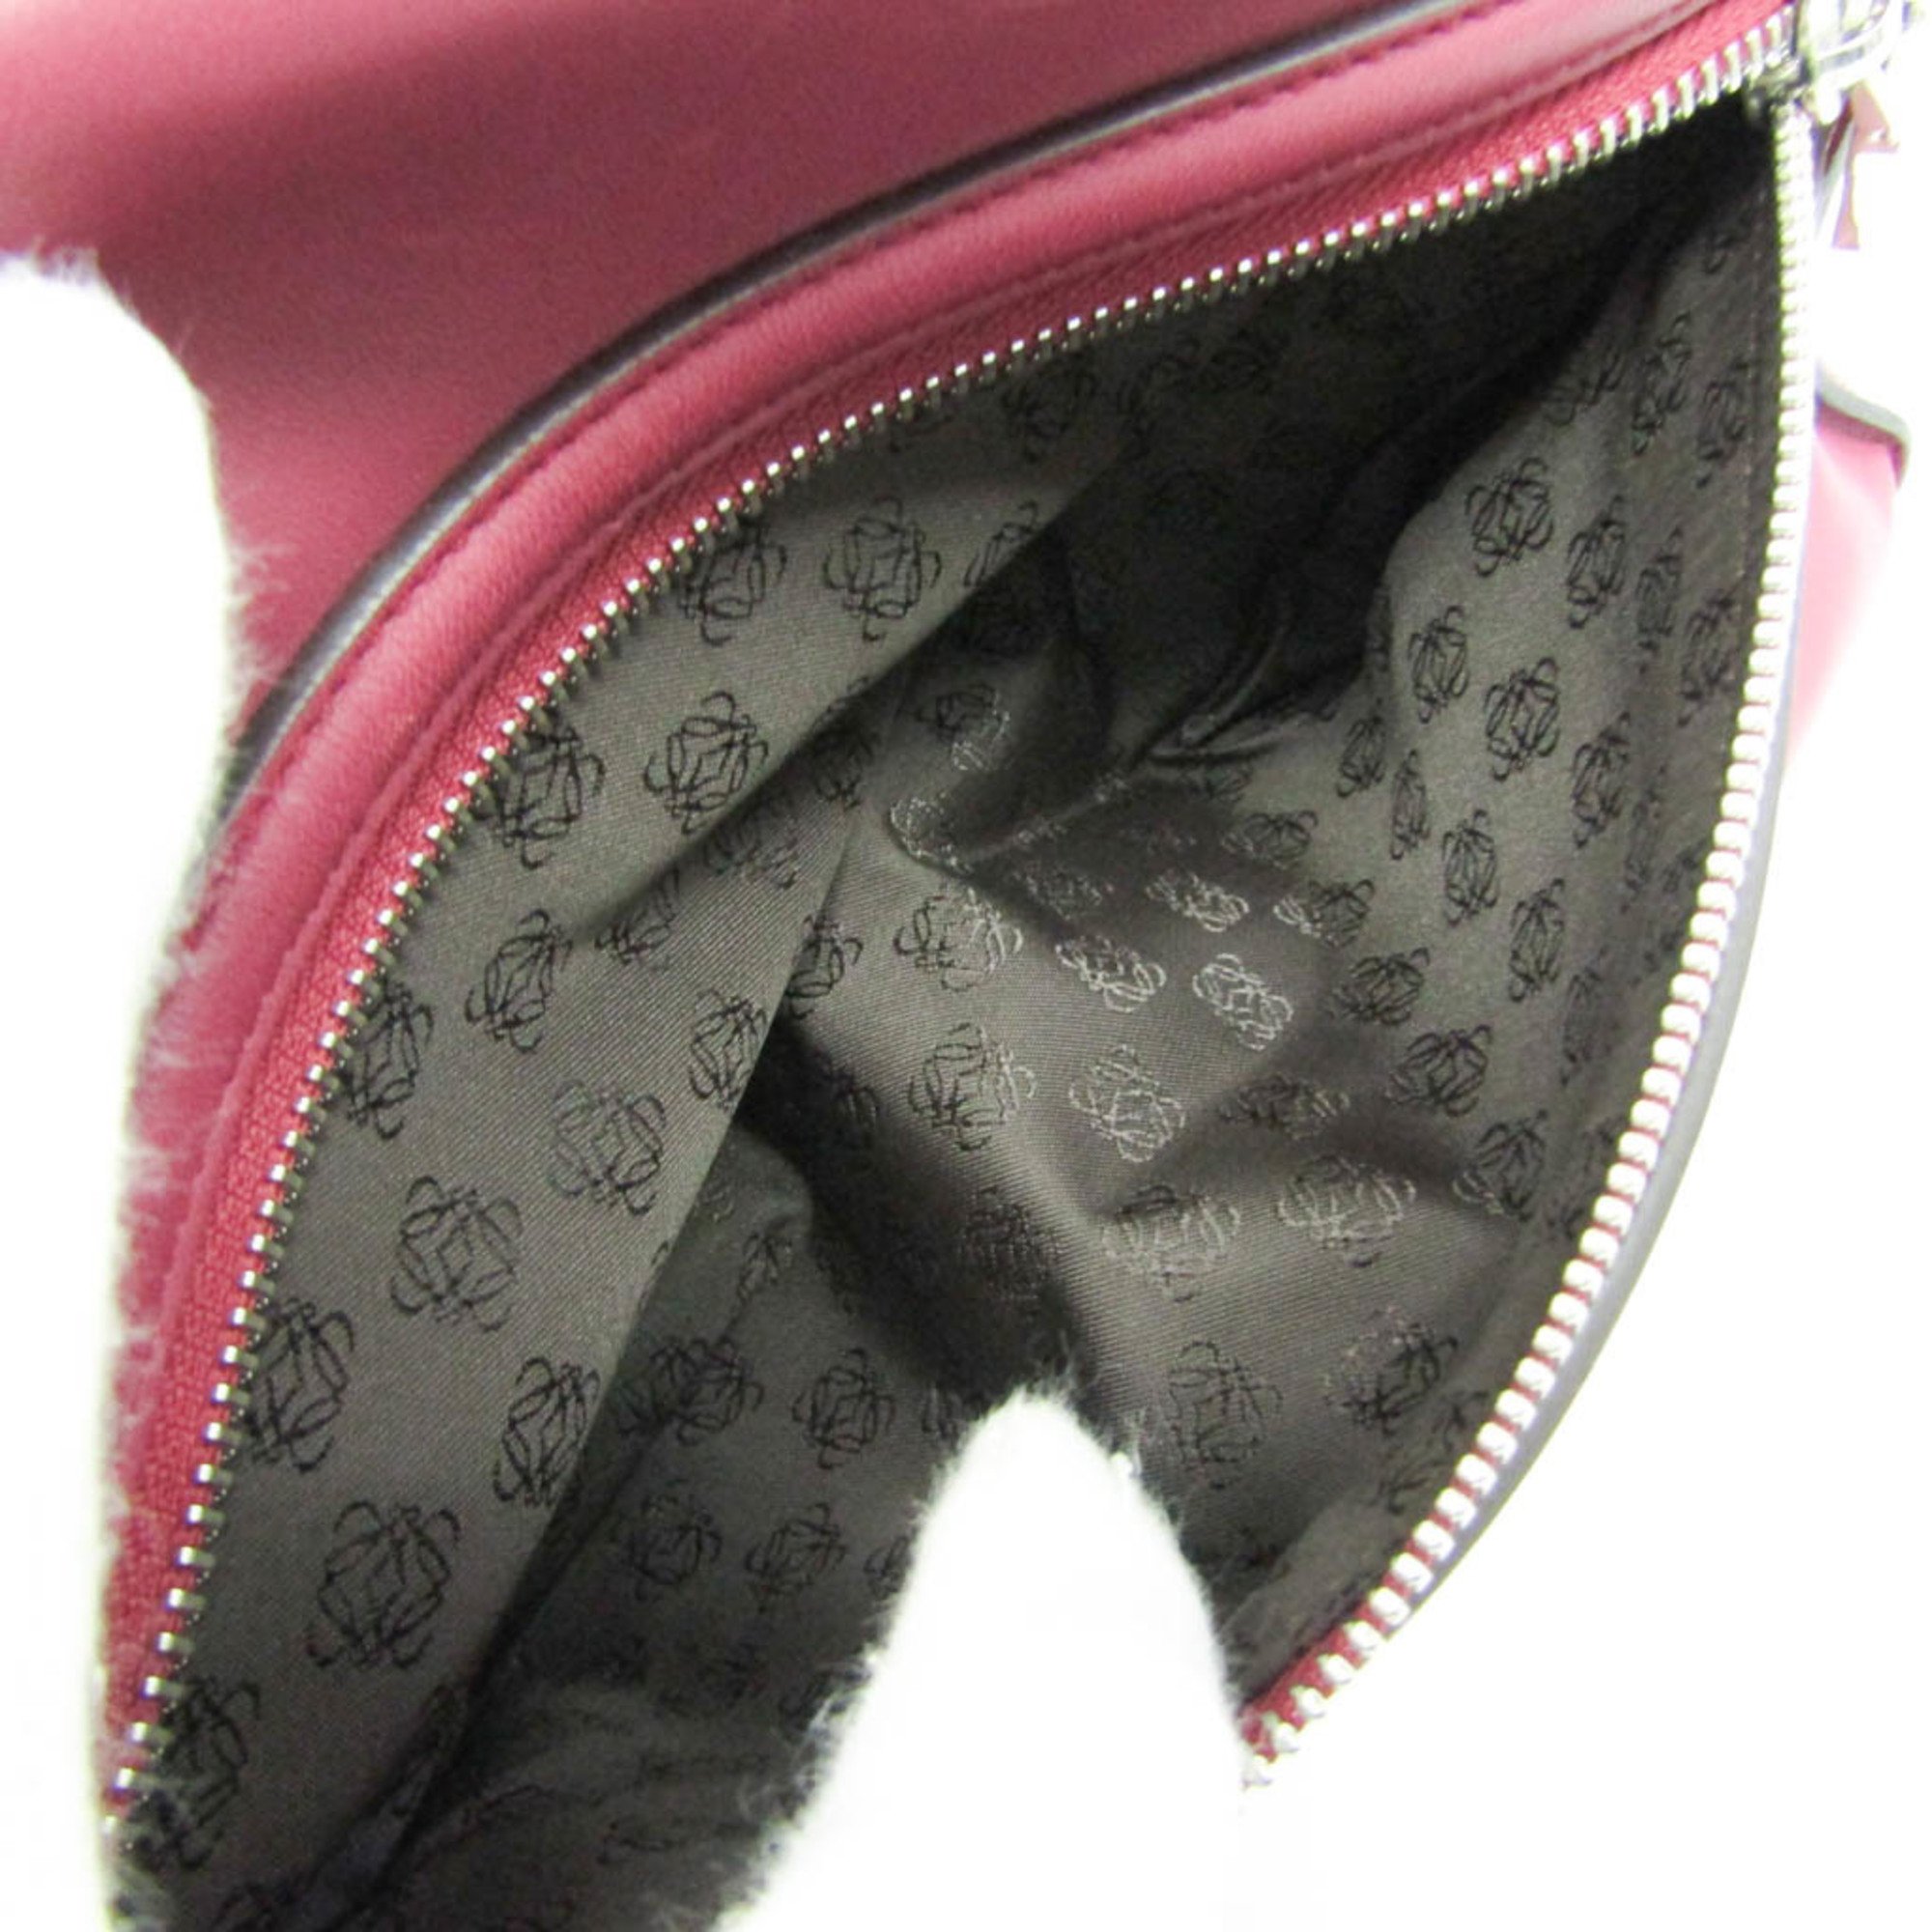 Loewe Women's Leather Clutch Bag Bordeaux